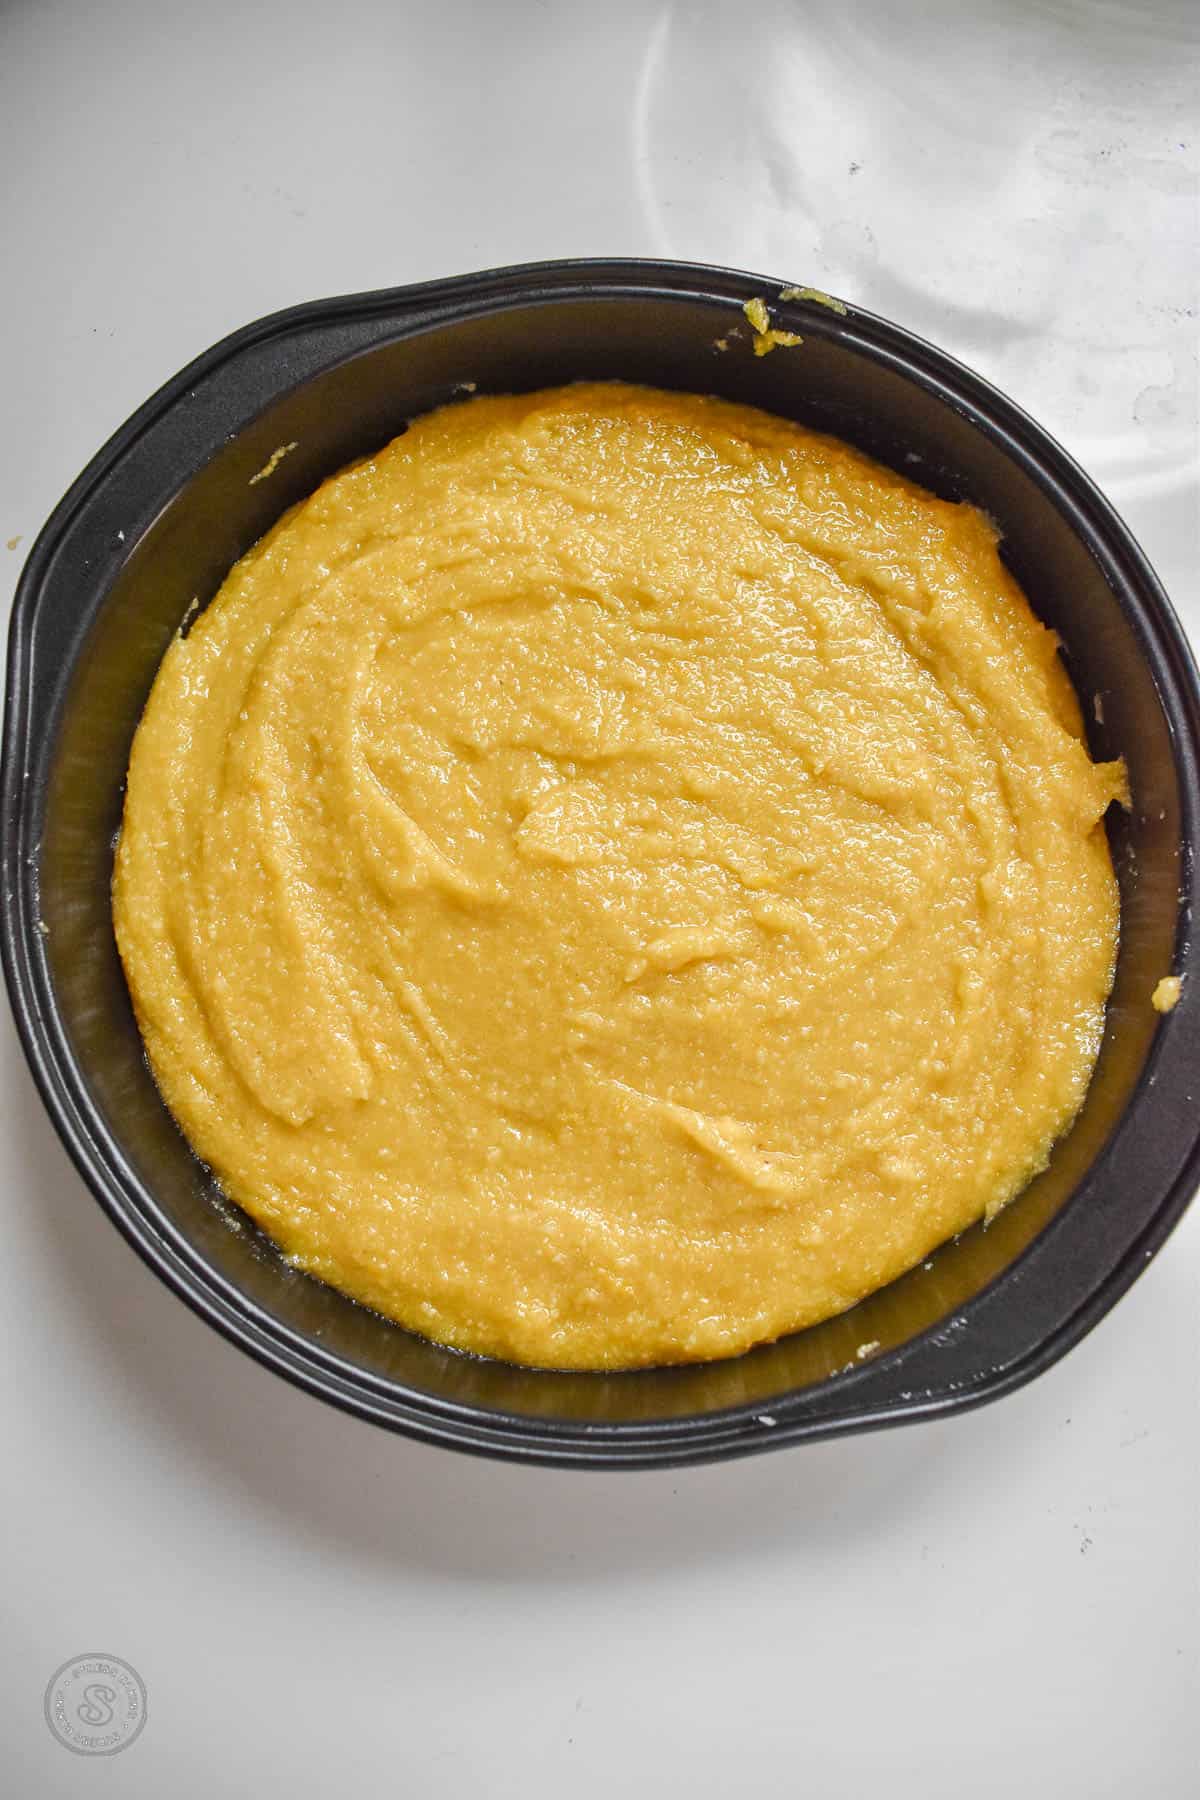 Yellow cake batter in a dark round cake pan